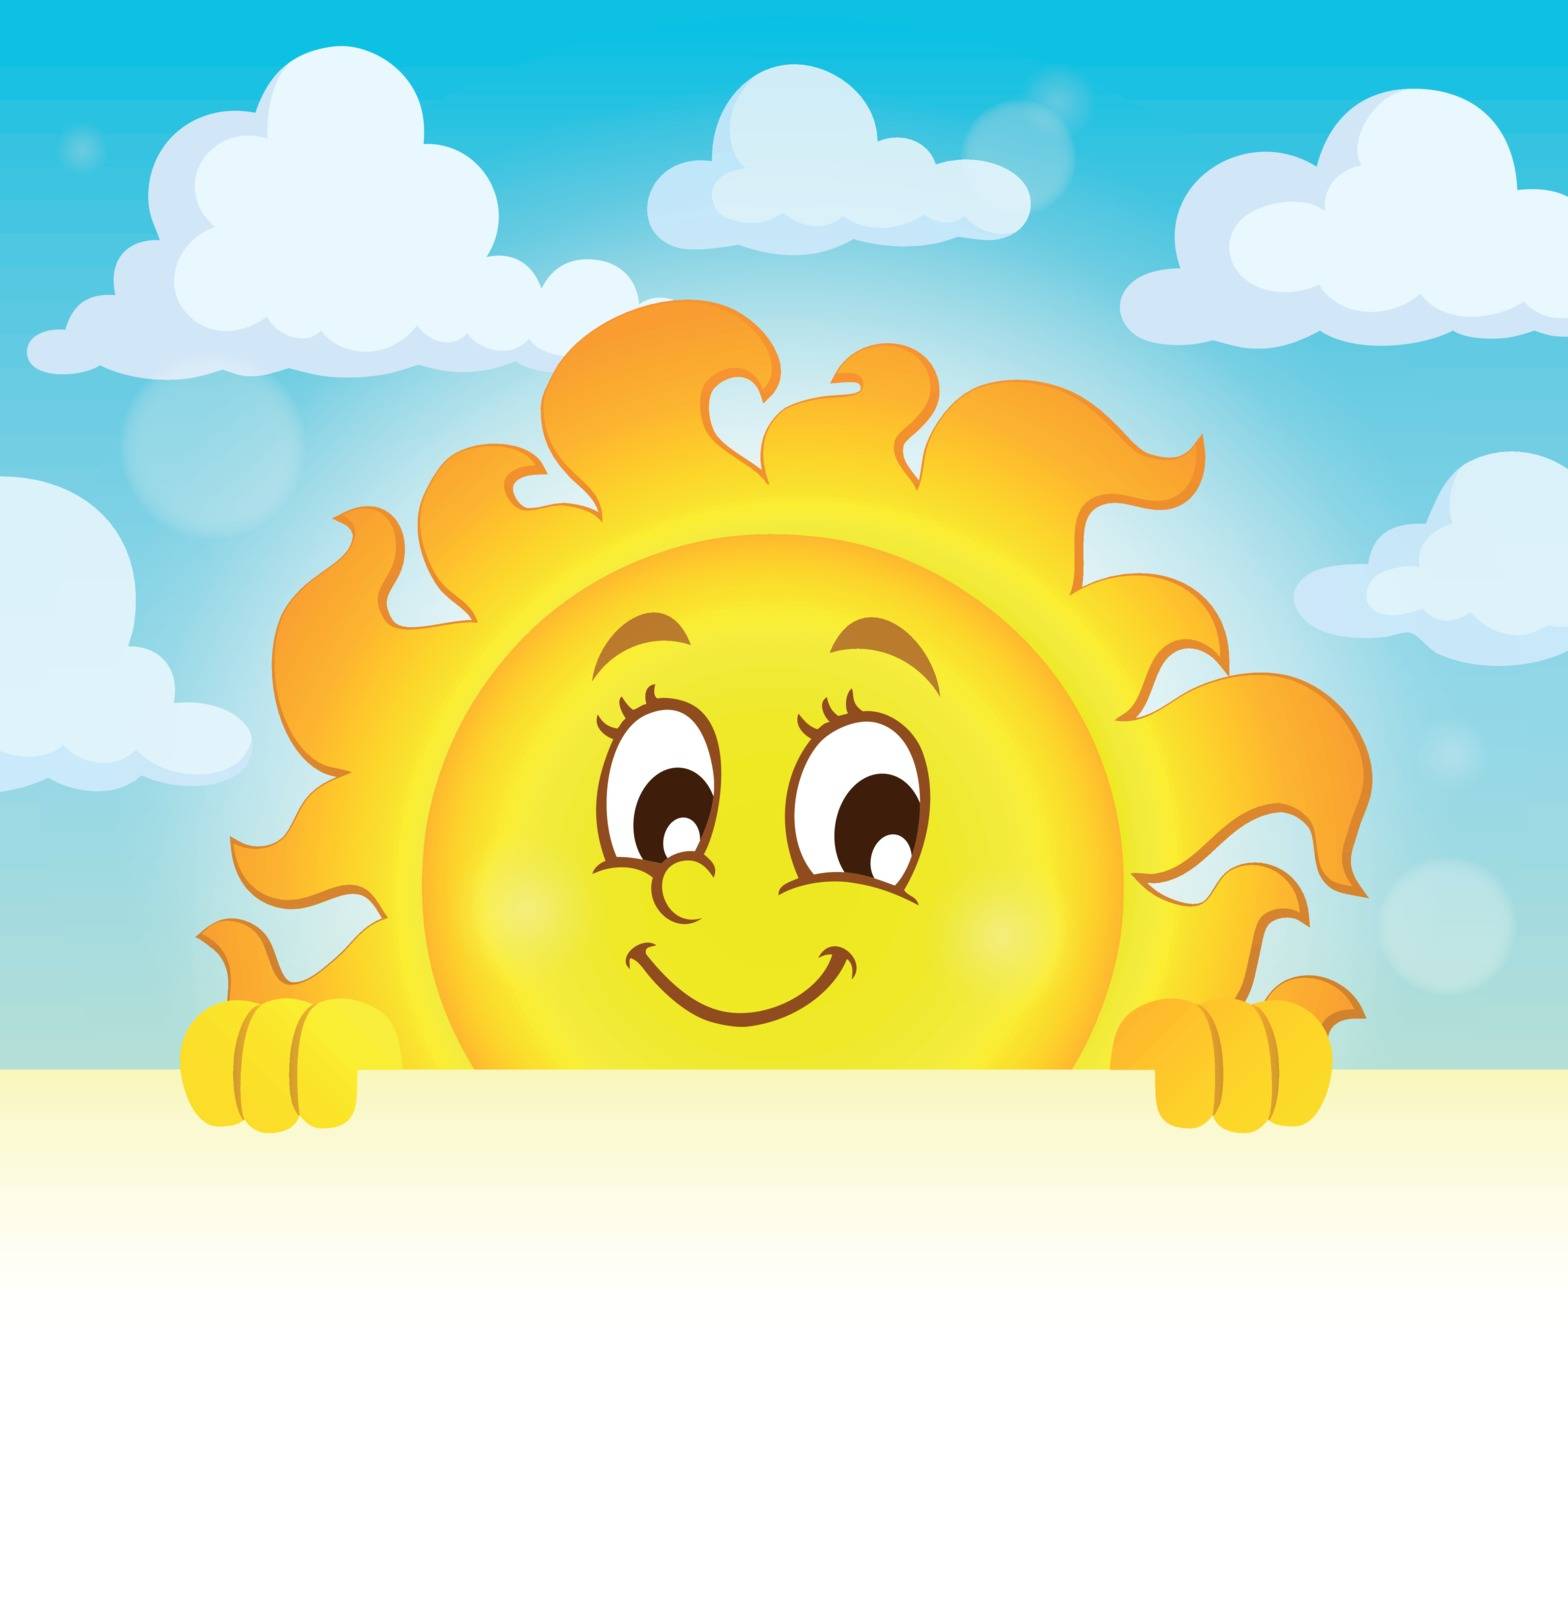 Happy lurking sun theme image 1 - eps10 vector illustration.